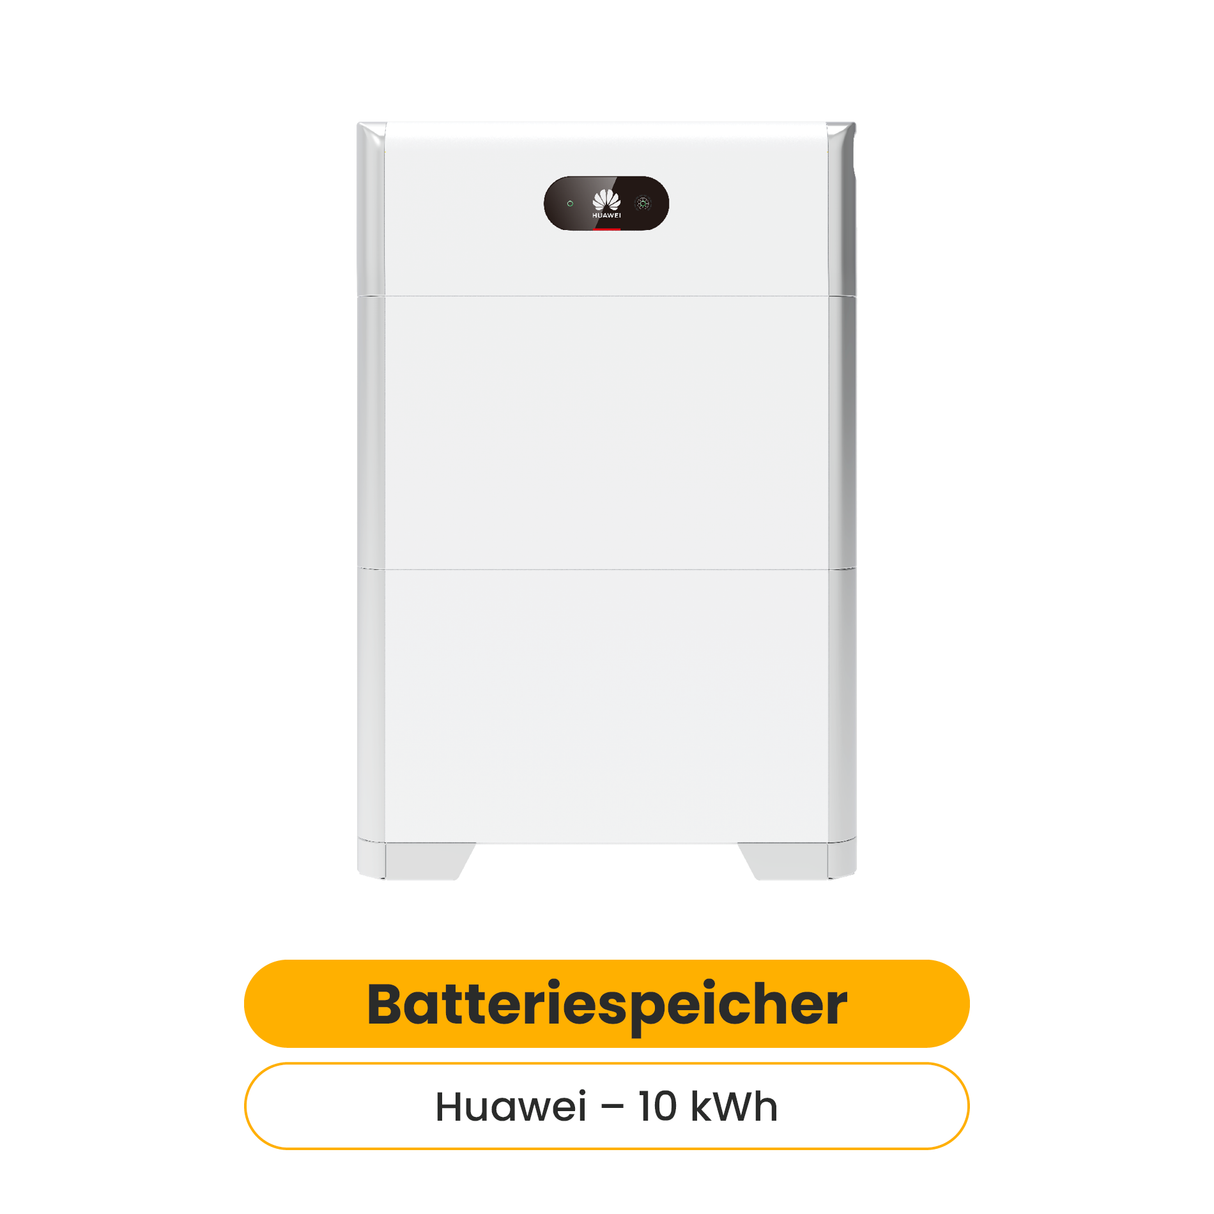 Huawei Batteriespeicher LUNA2000-10-S0 10 kWh